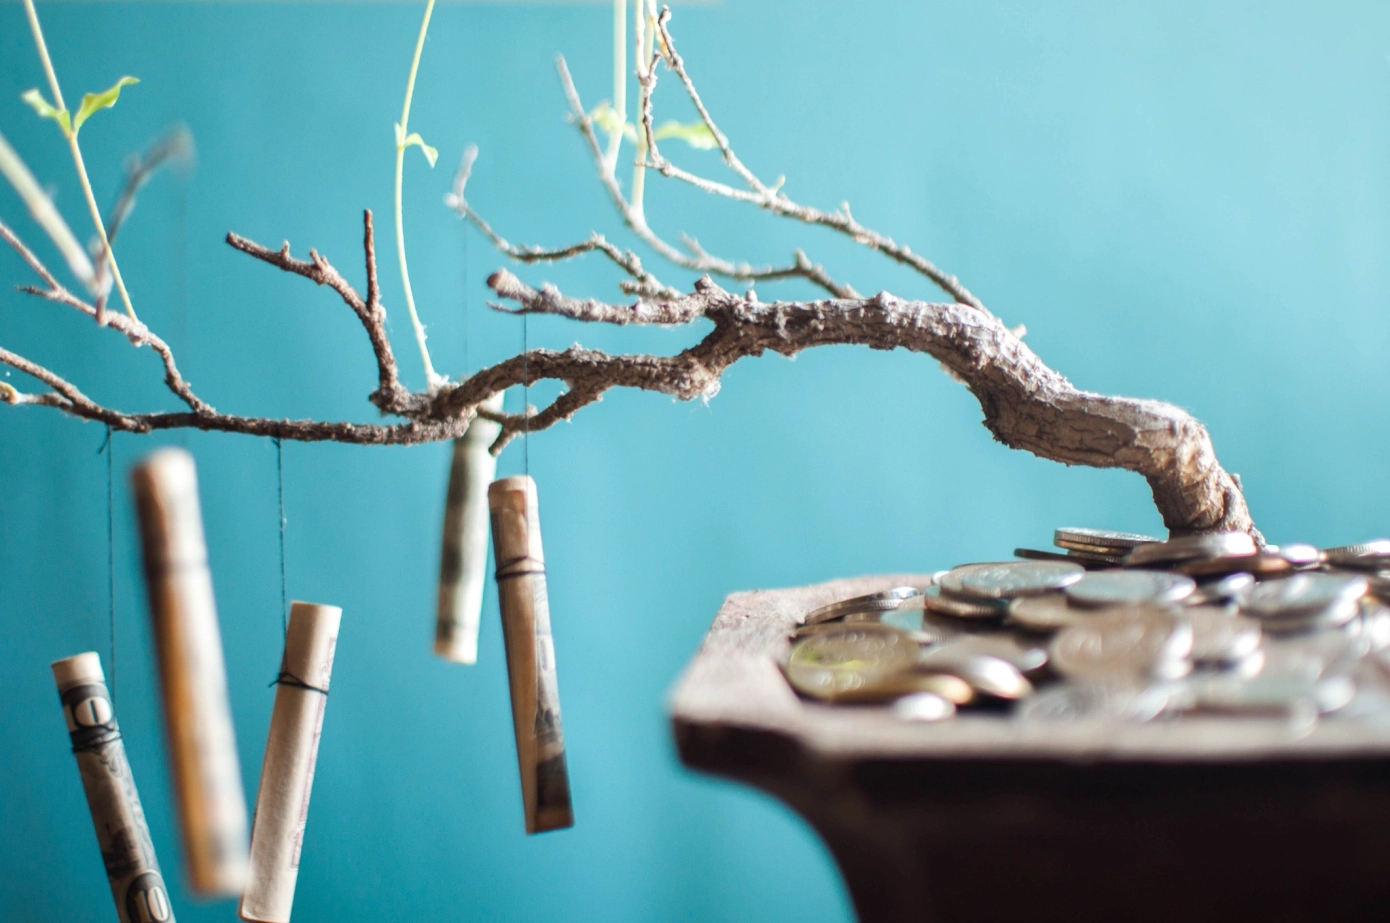 Rolled dollar bills hang from a bonsai tree.